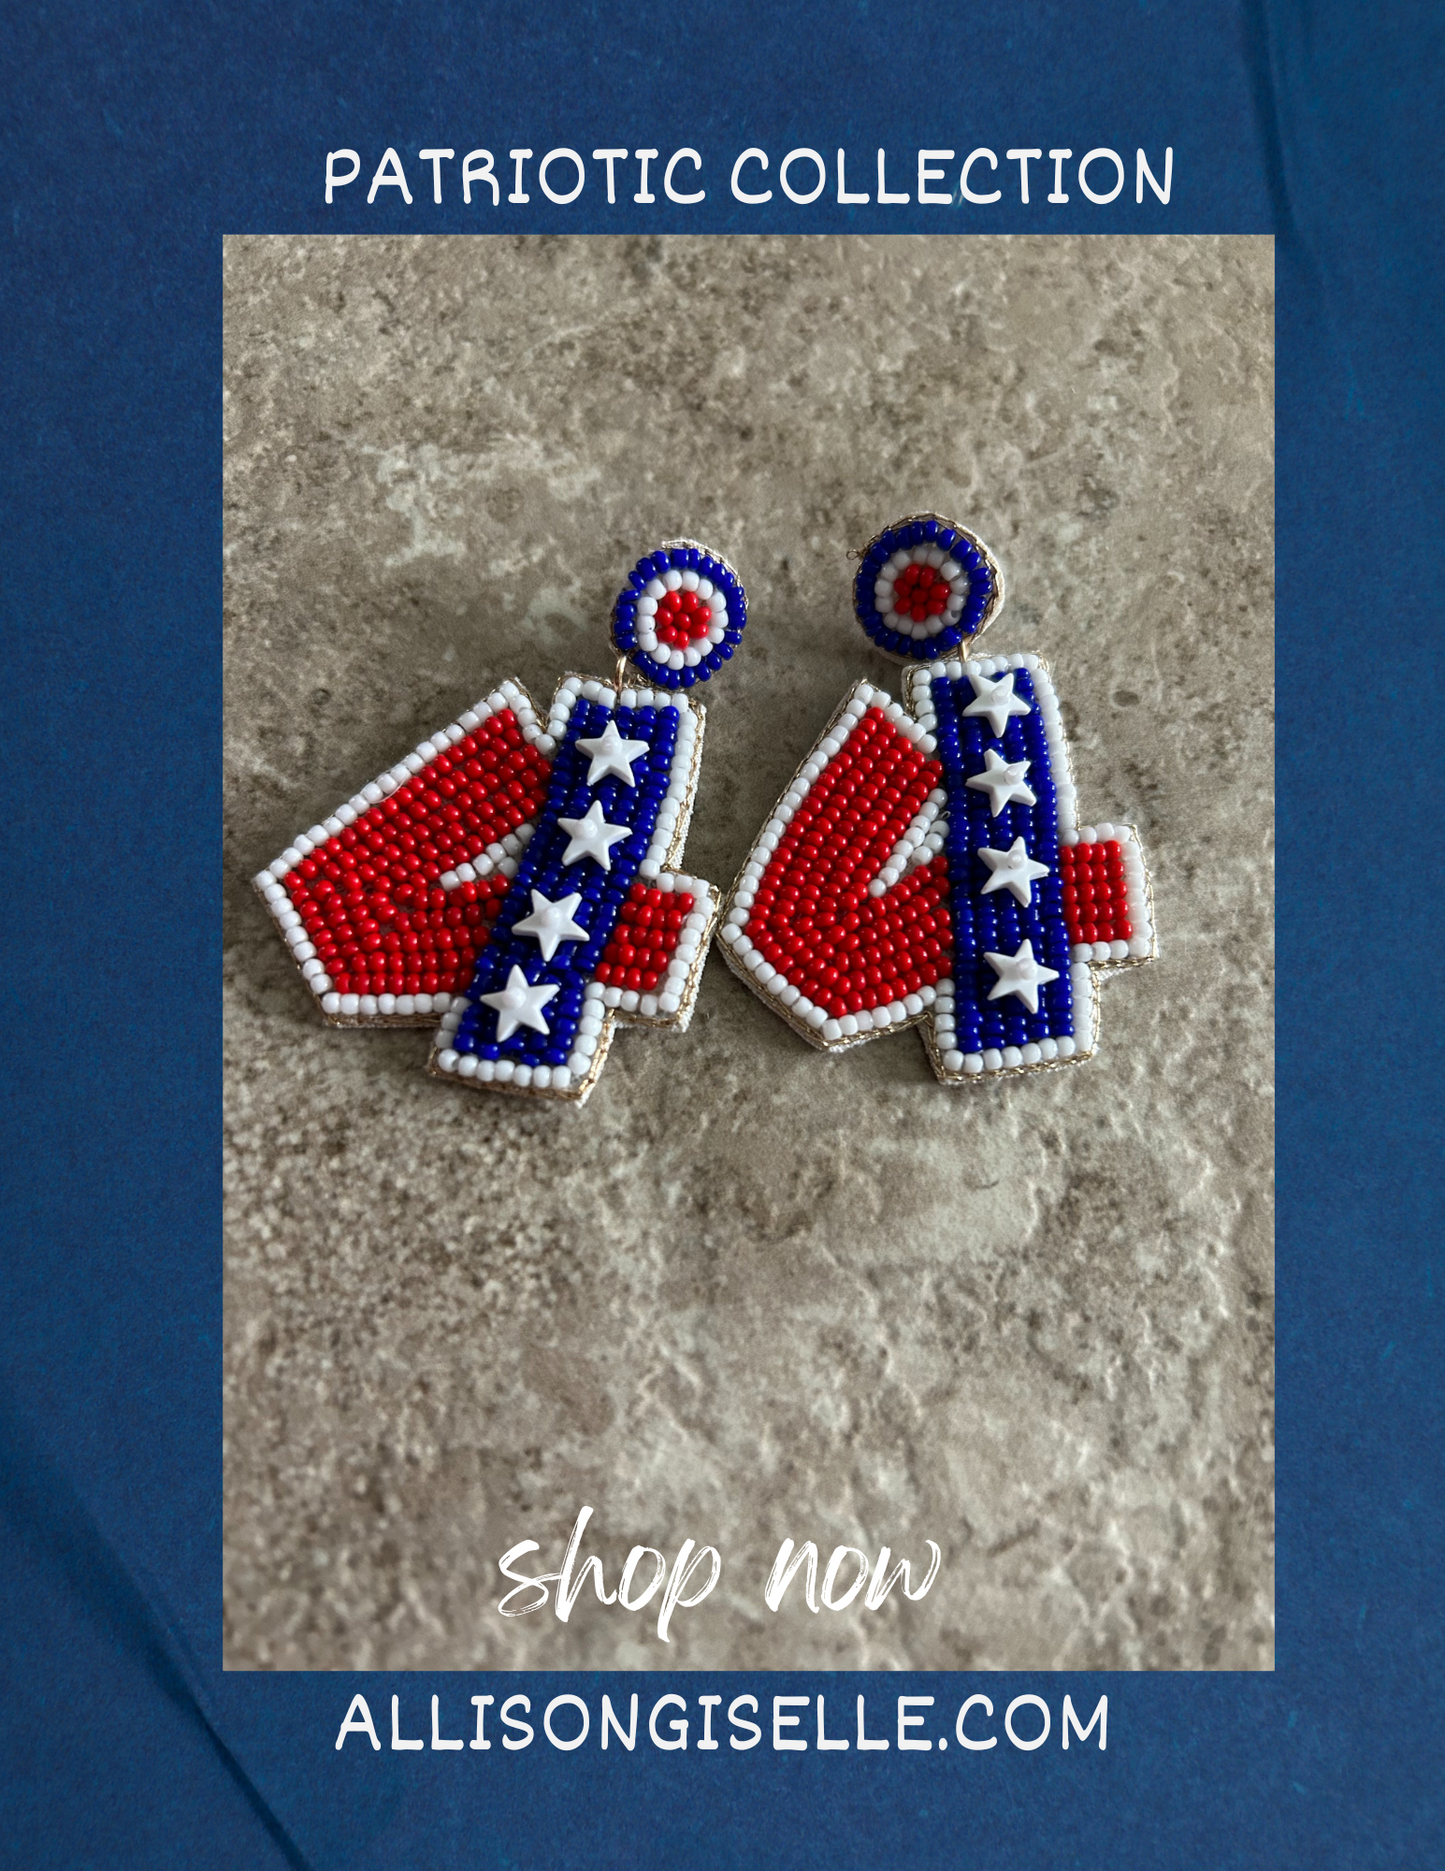 4th Star Earrings, Patriotic Earrings, July 4th, Red, White and Blue Earrings